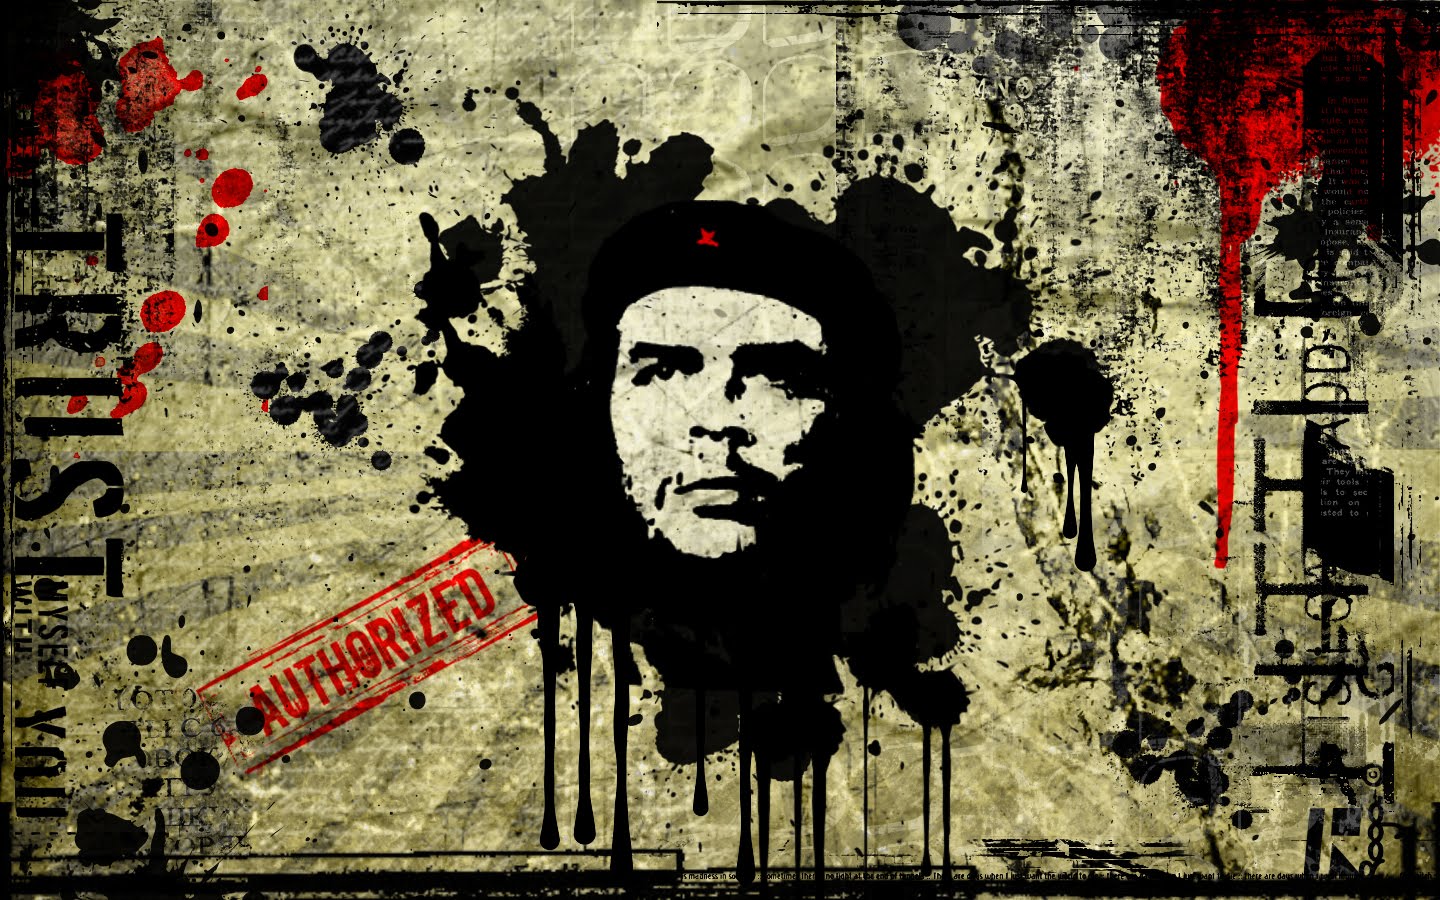 https://blogger.googleusercontent.com/img/b/R29vZ2xl/AVvXsEjNeP9A6ZvXC9DeYfwrtdqvfTVviEnZKJ9c8JuLk9_hISuPzr8qeJBVzWbkK1t2uQmjSAhlDihRcmJIXKWRoe4XmTYXFy8FYne1Ag2gRWfZ7Sw6MPrxdkZuc7Put5MmmyTM0jRtxtNNCixs/s1600/Che-Guevara-Latest-Wallpapers-5.jpg